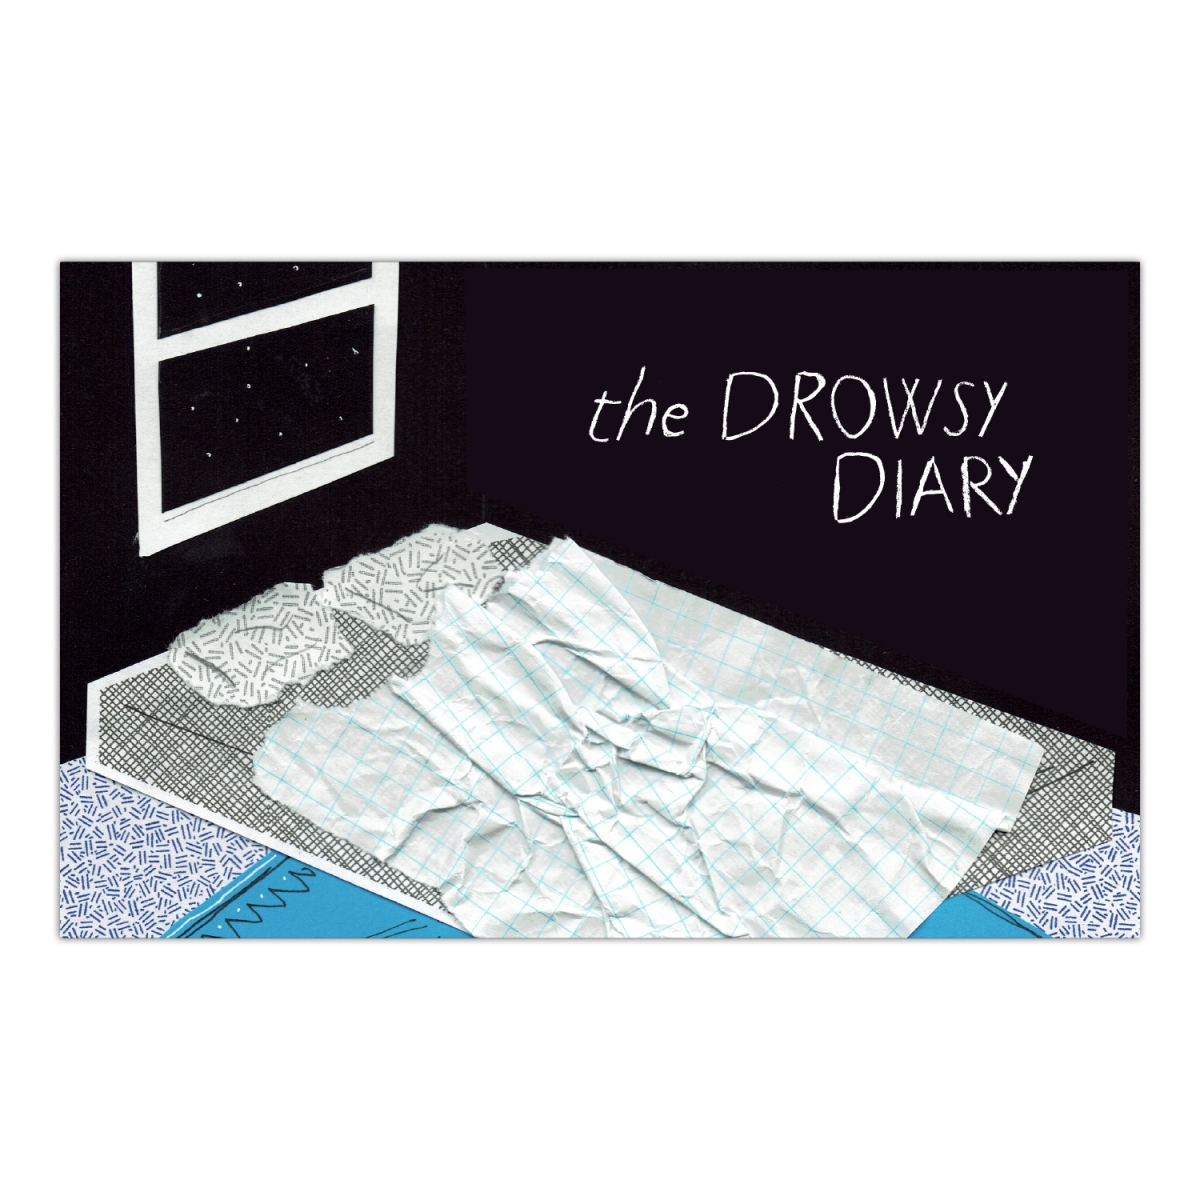 The Drowsy Diary by Daniel Easley (BFA '18)